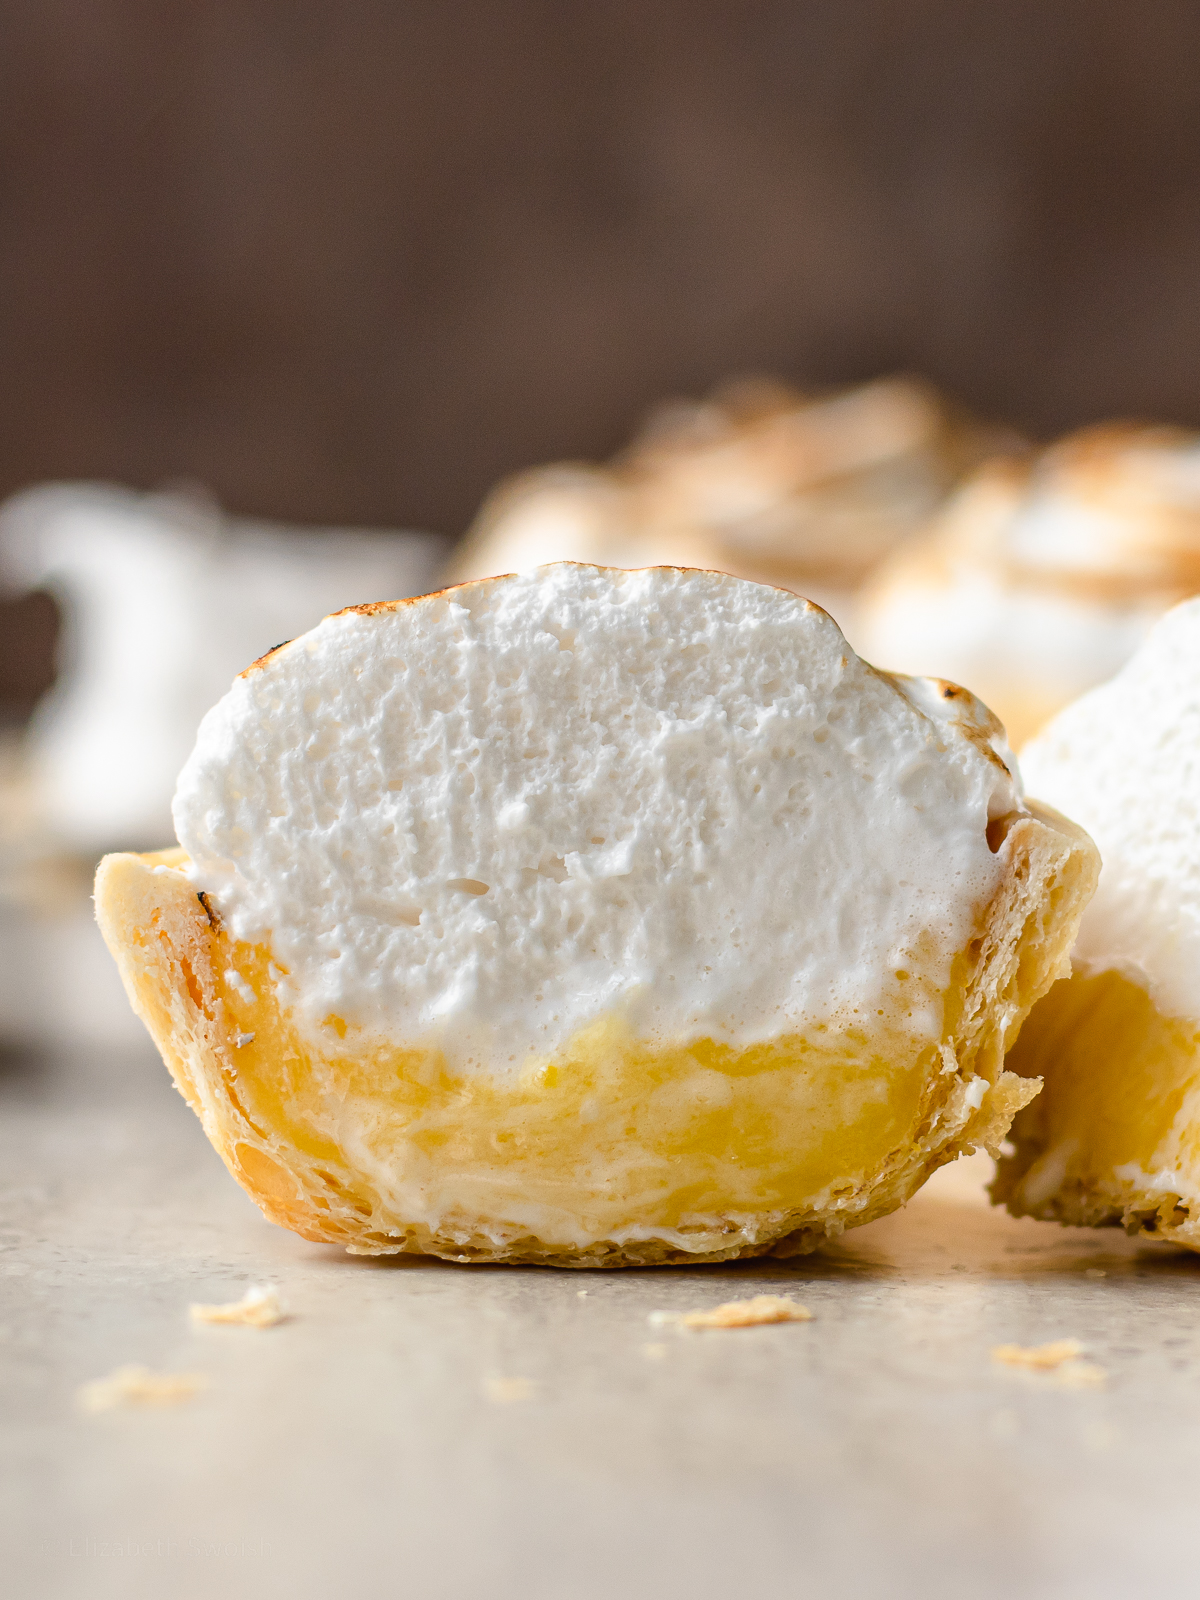 Mini Lemon Meringue Pie cut in half to see lemon curd, meringue, and a flaky pie shell.